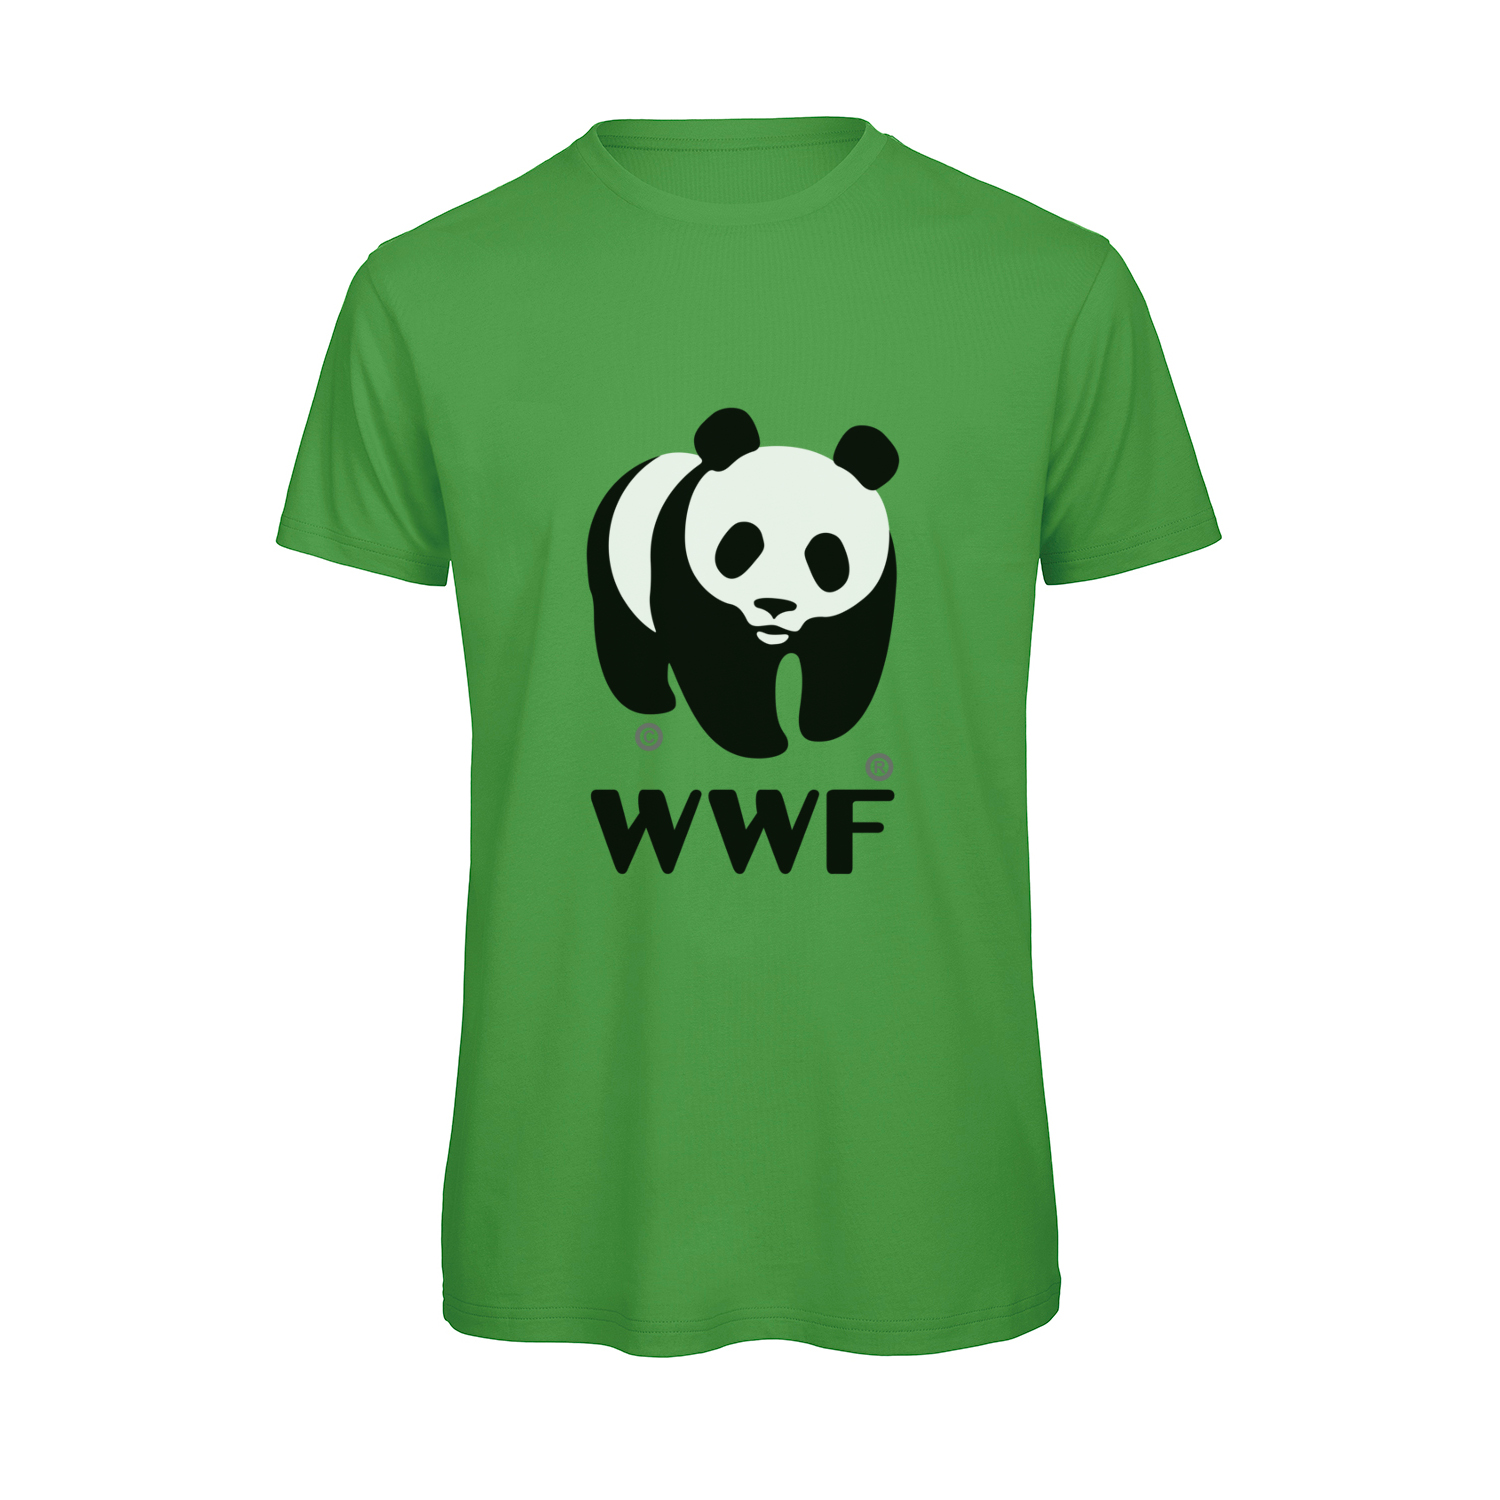 Organic Logo Printed T-Shirt